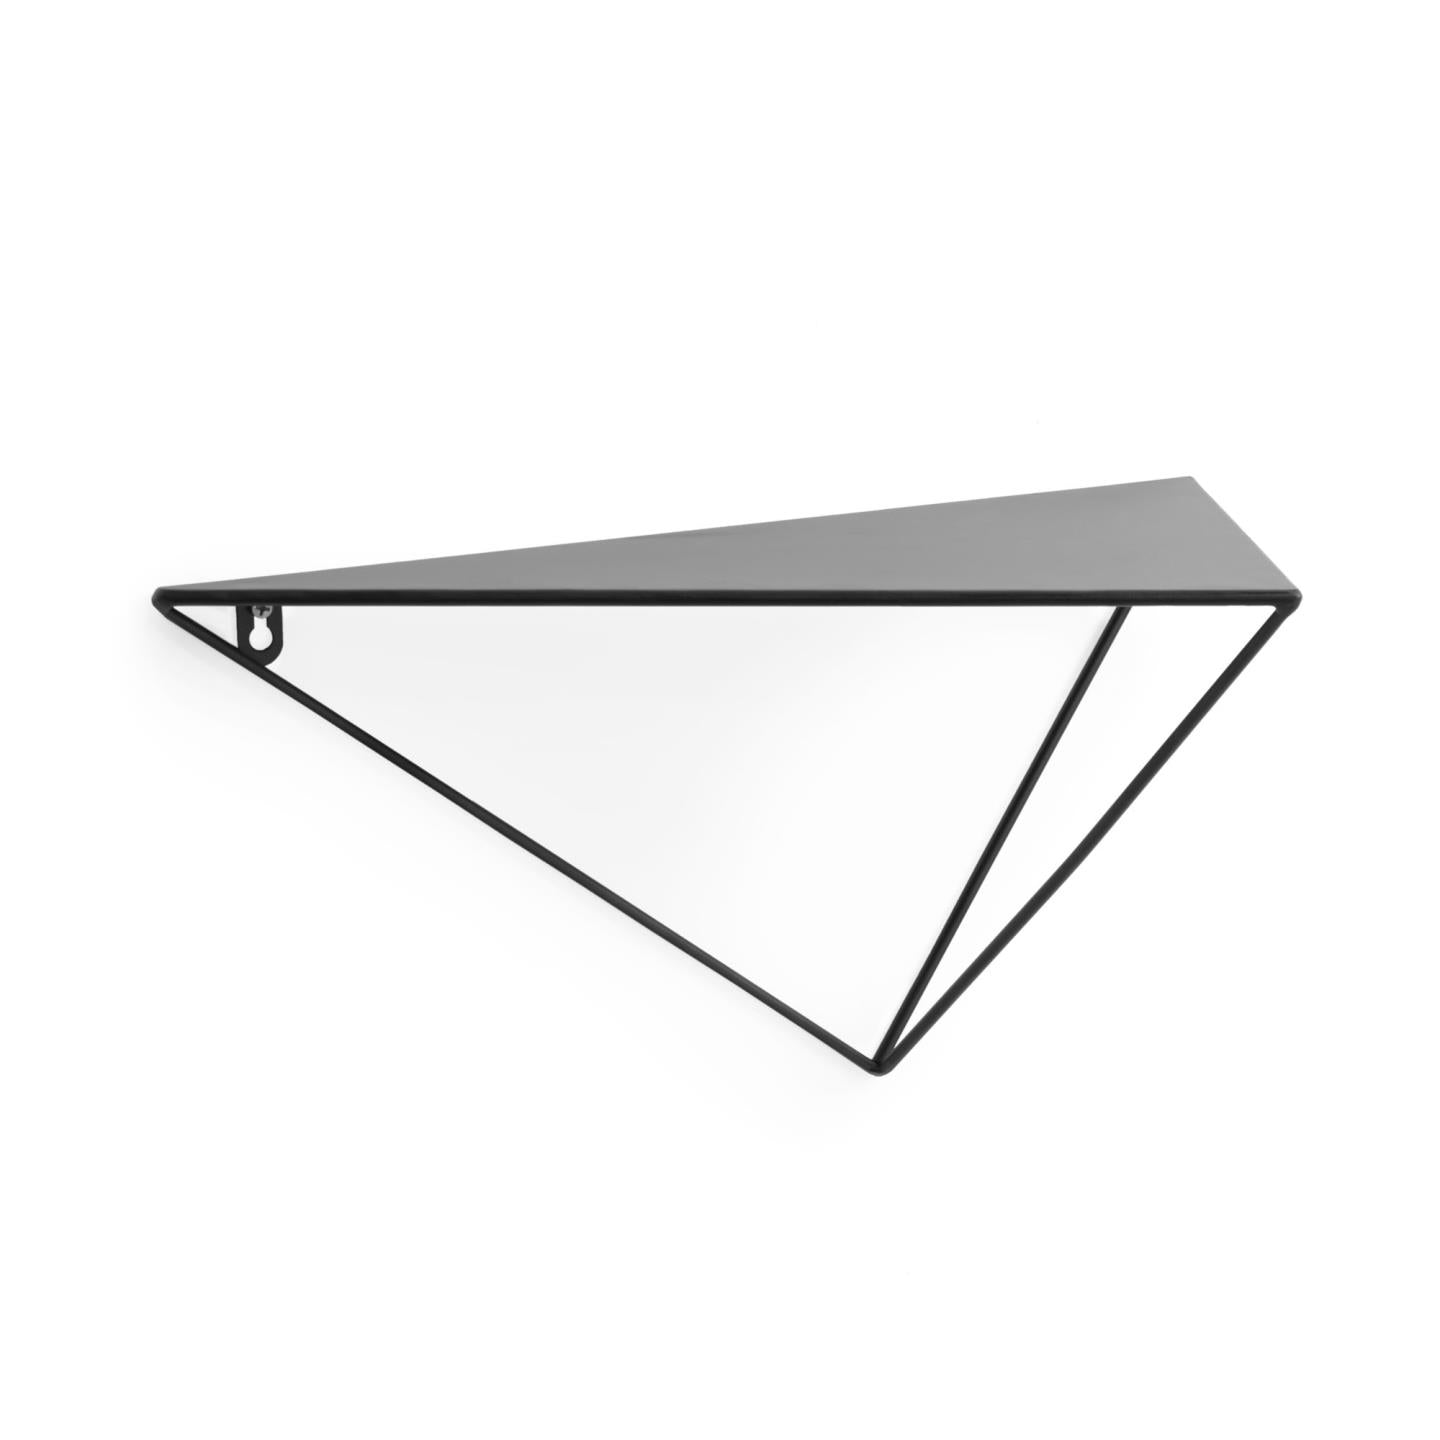 Teg prism shelf in steel with black finish 40 x 20 cm